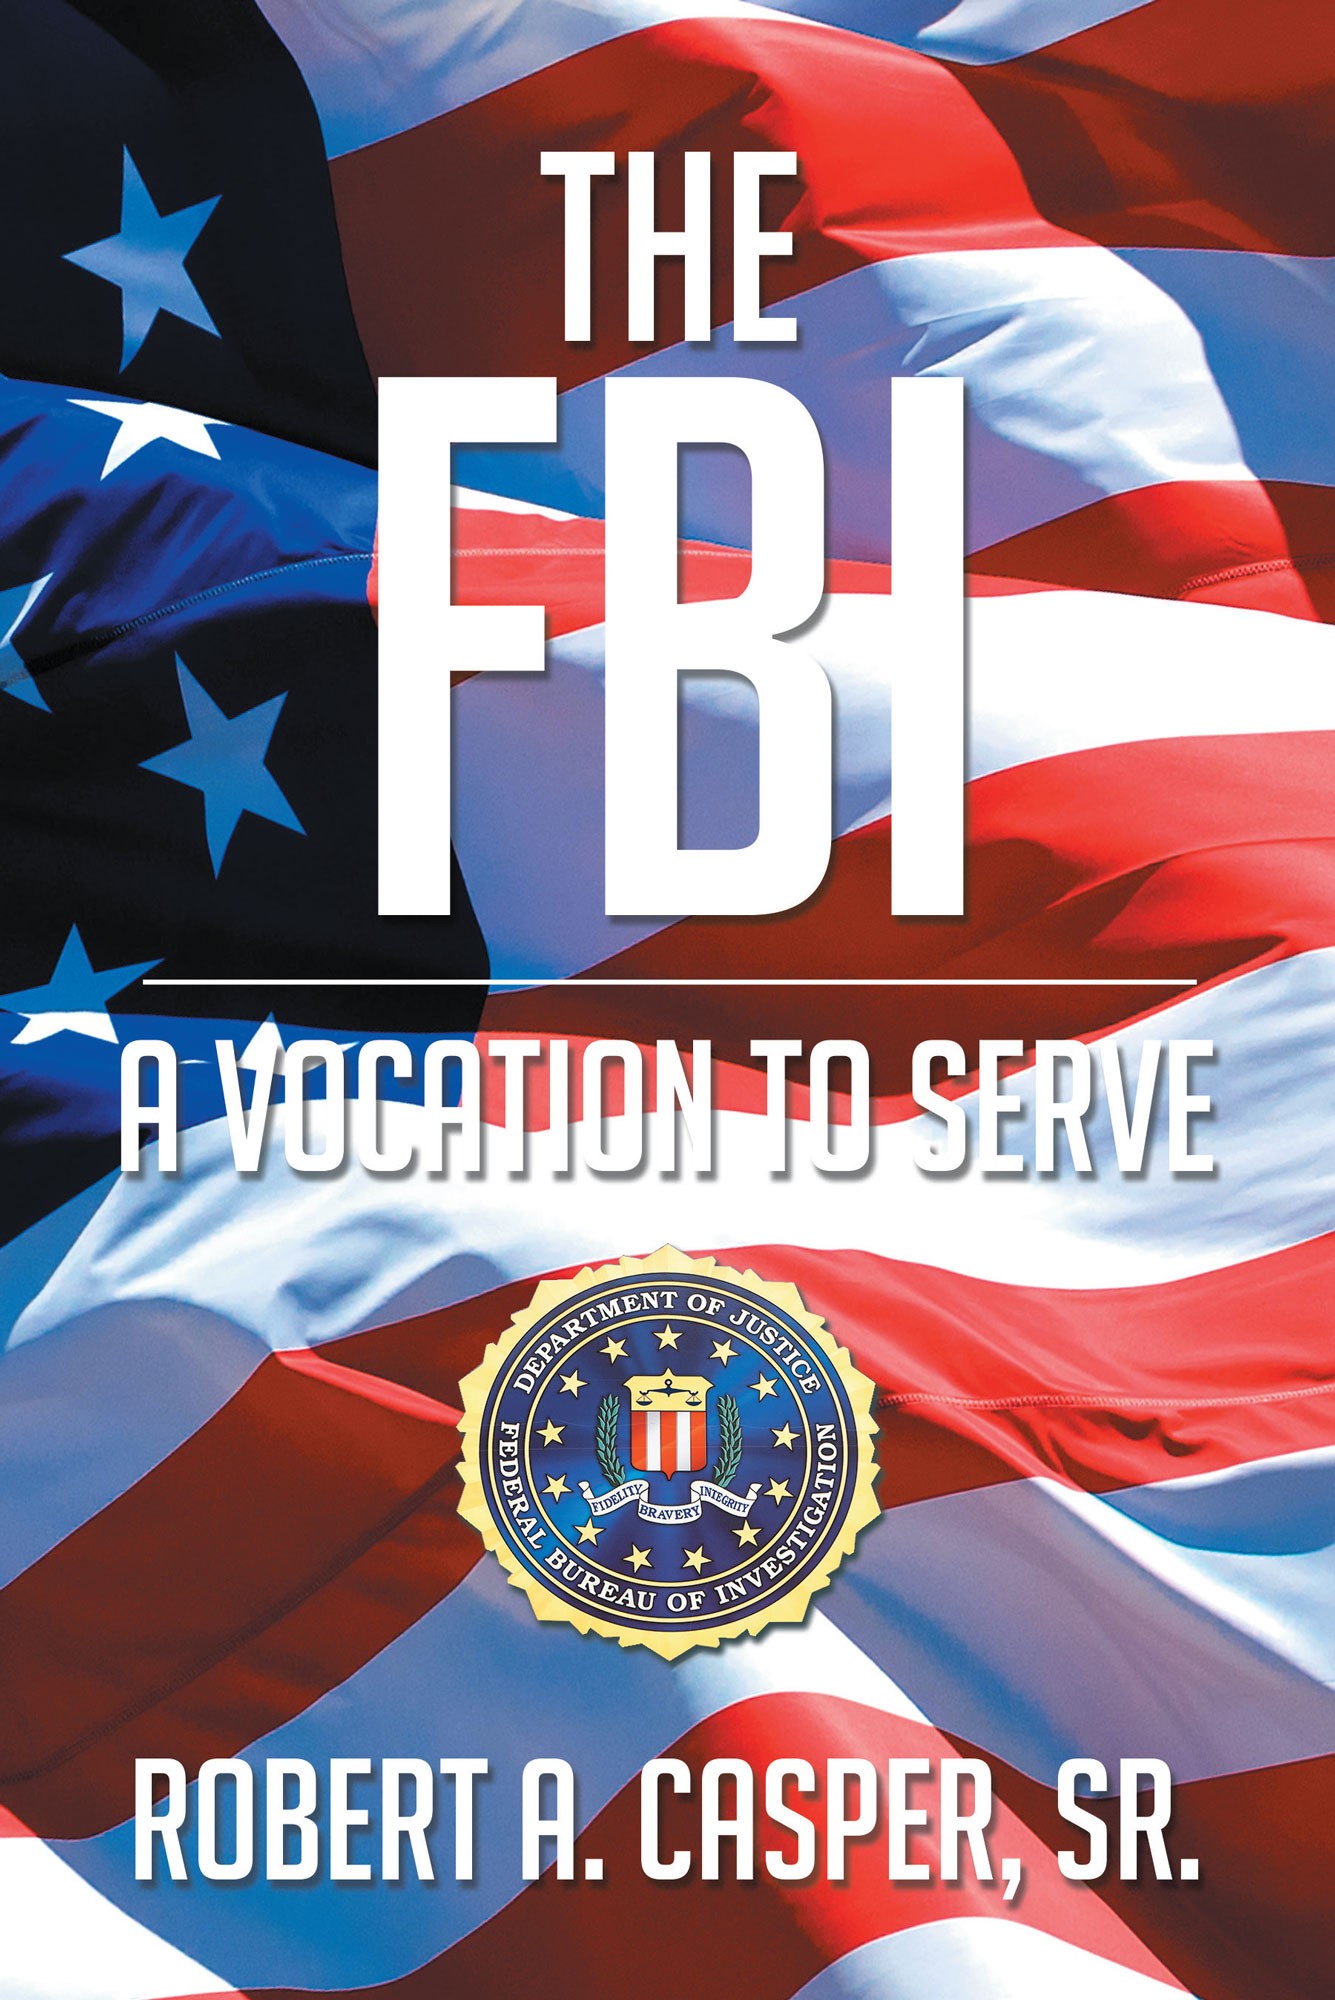 New Book “The FBI, a Vocation to Serve” by Robert A. Casper, Sr. is a